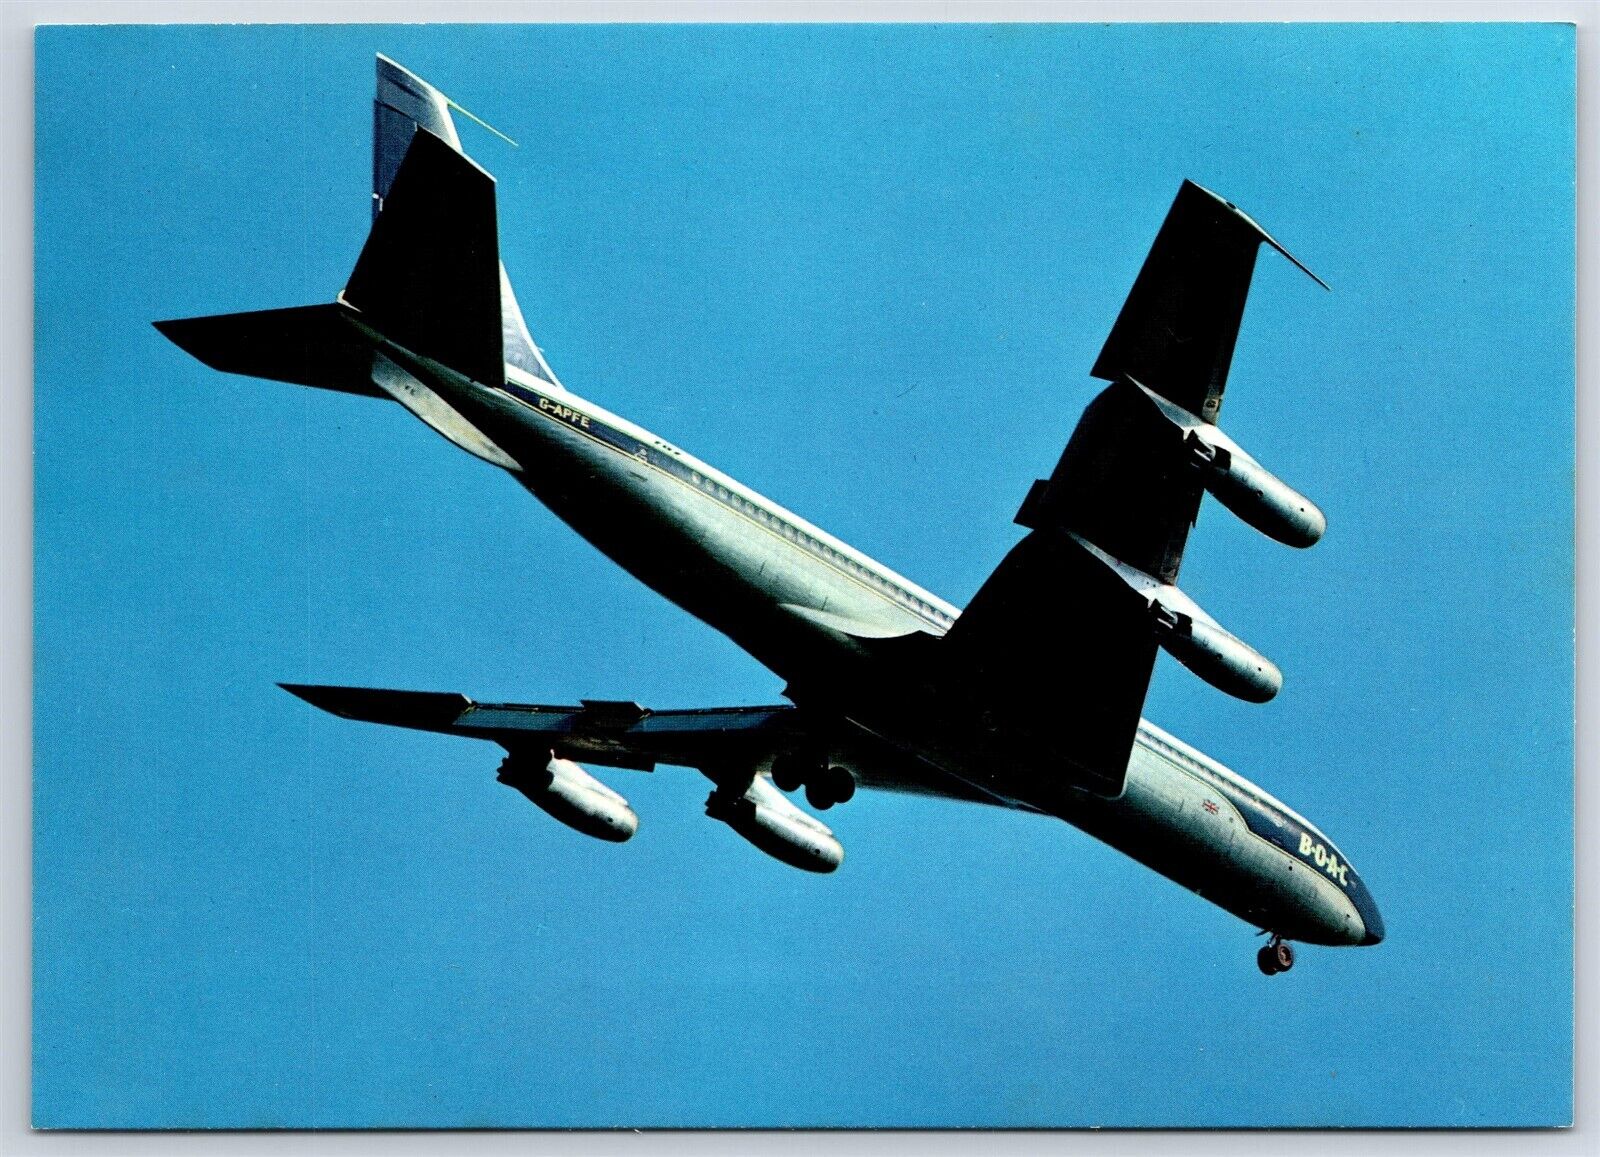 Airplane Postcard BOAC British Airways Airlines Boeing 707 Landing Gear Down DY3